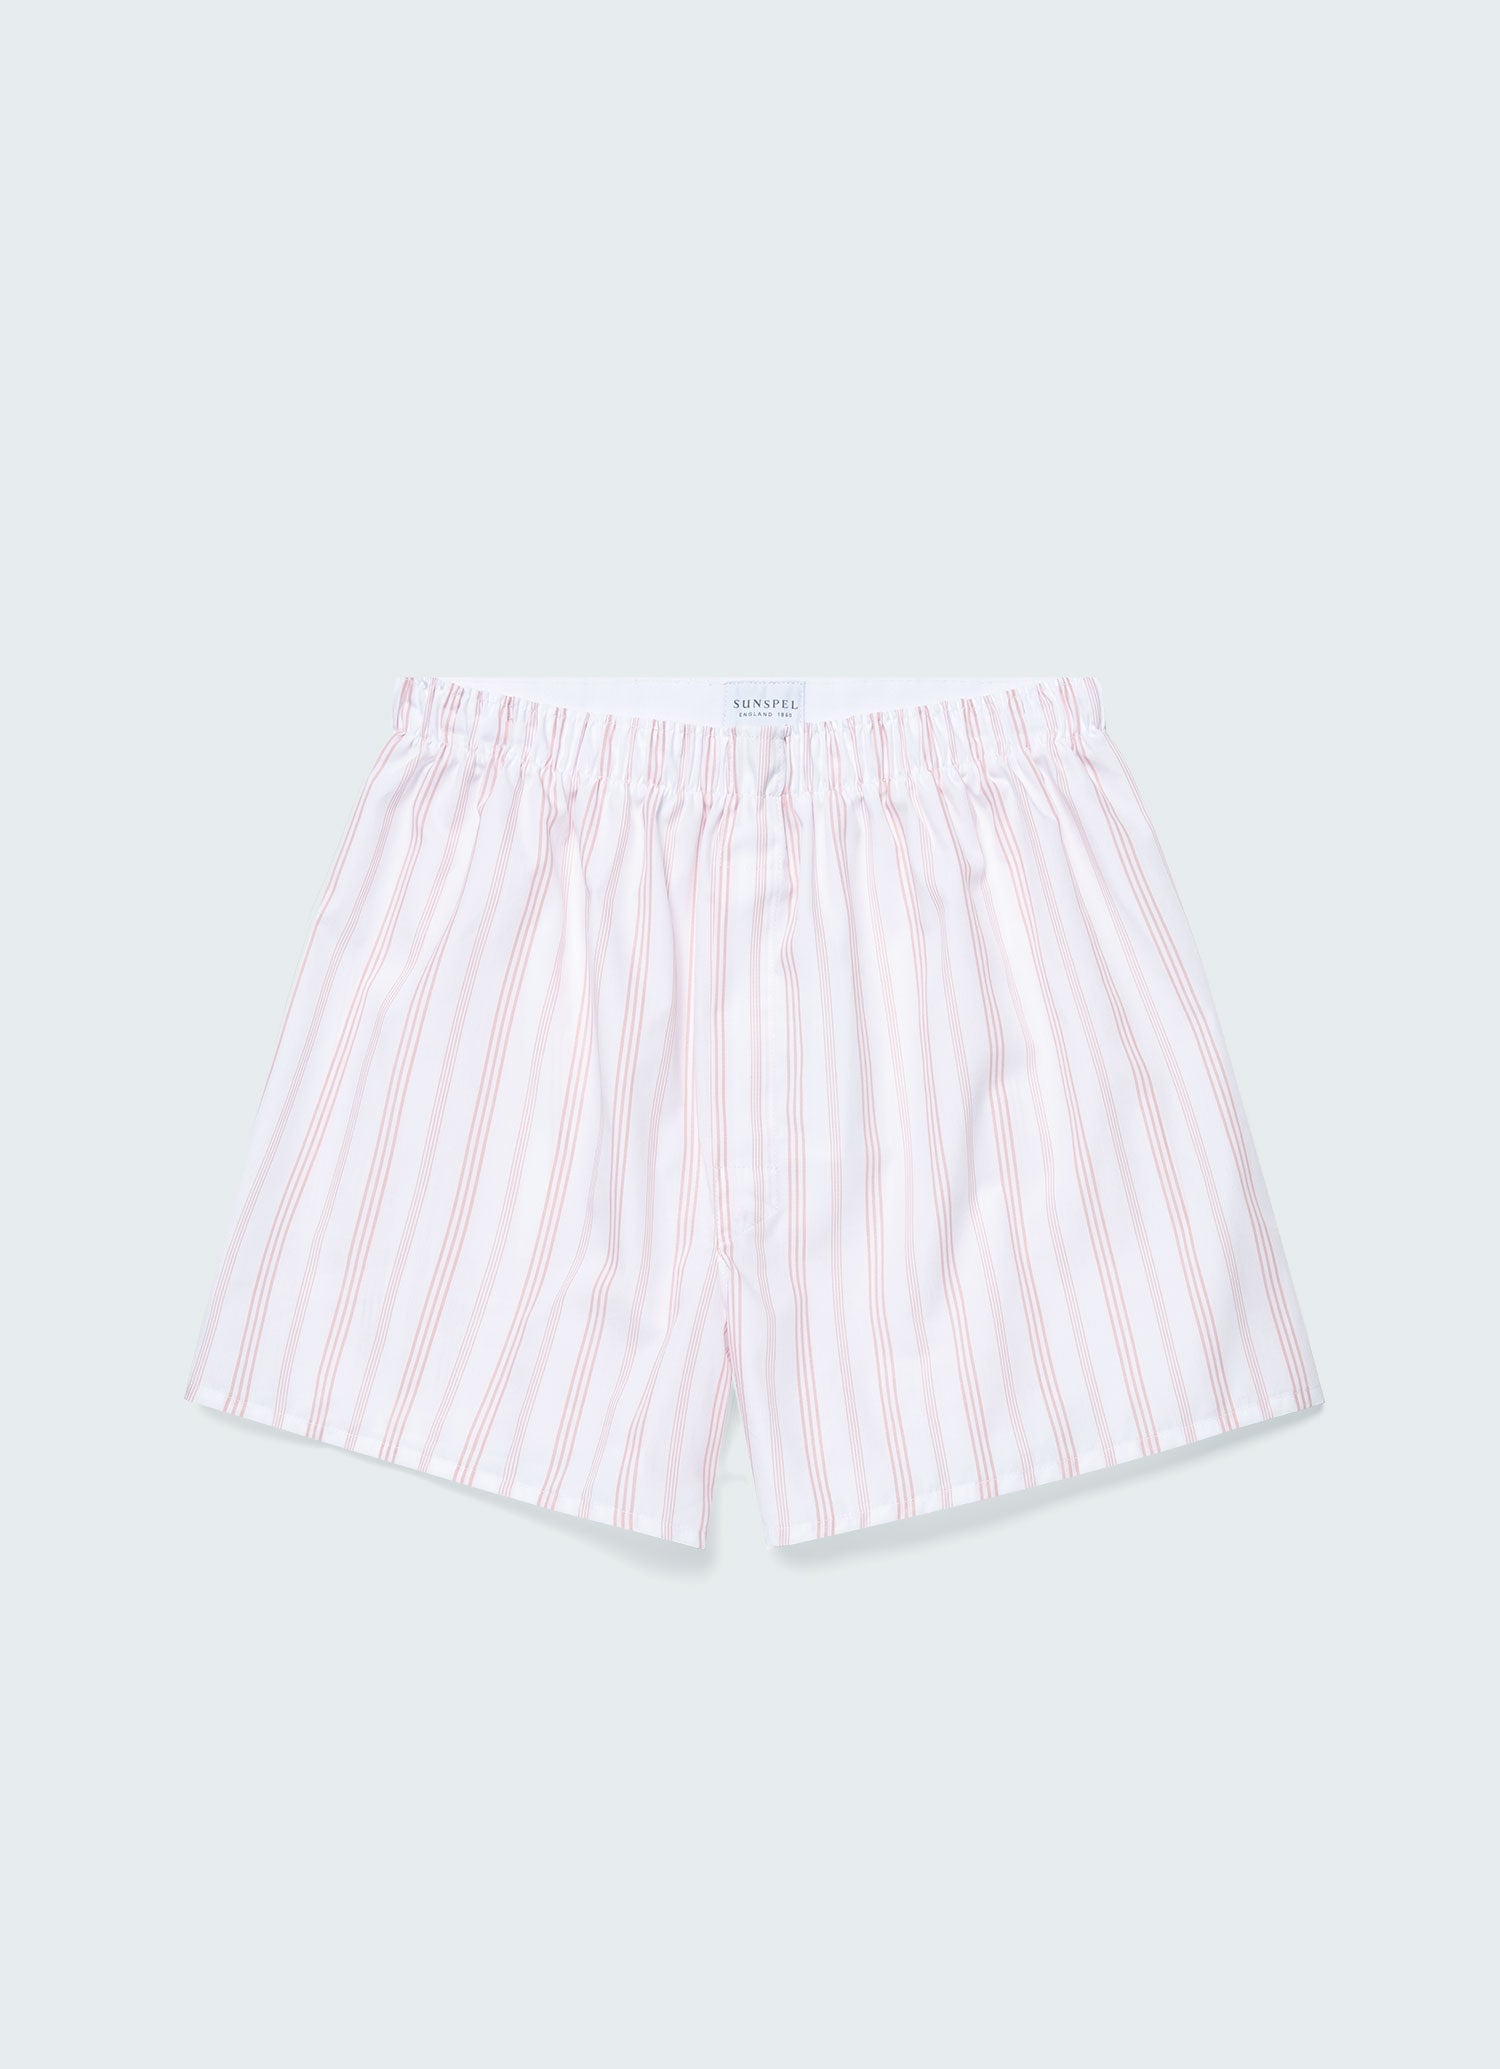 Classic Stripe Boxer Shorts